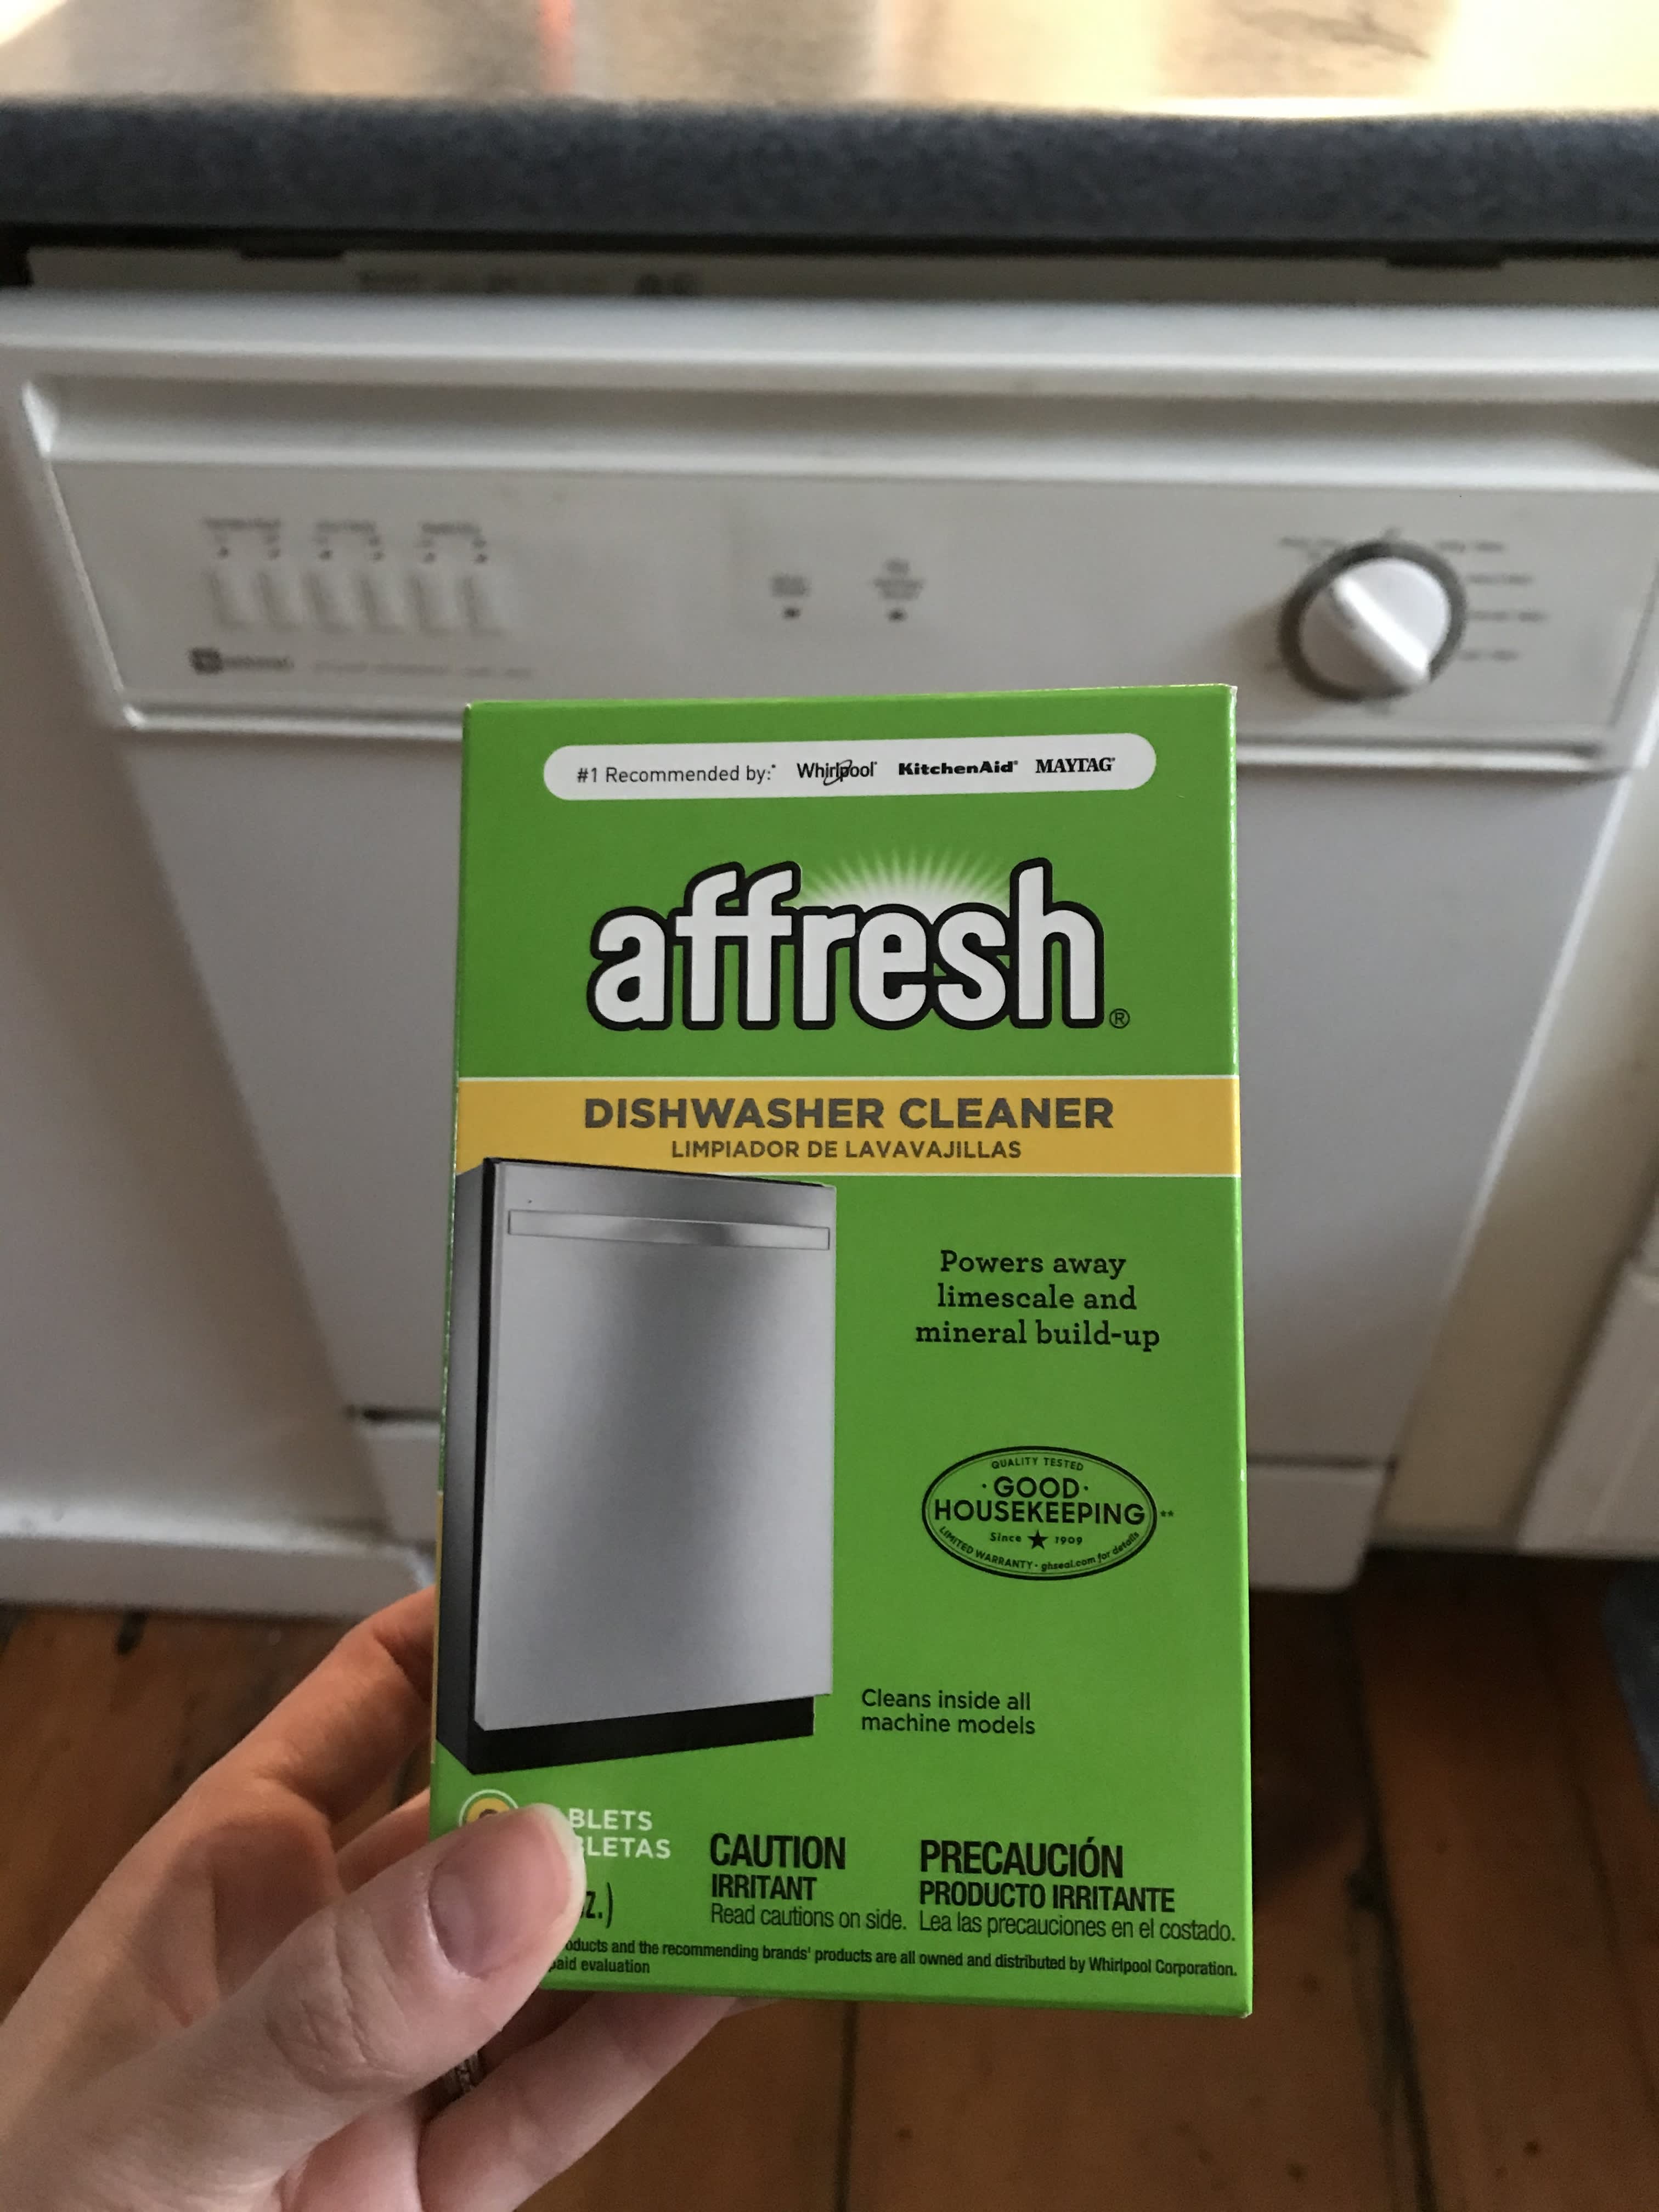 kitchenaid dishwasher says affresh